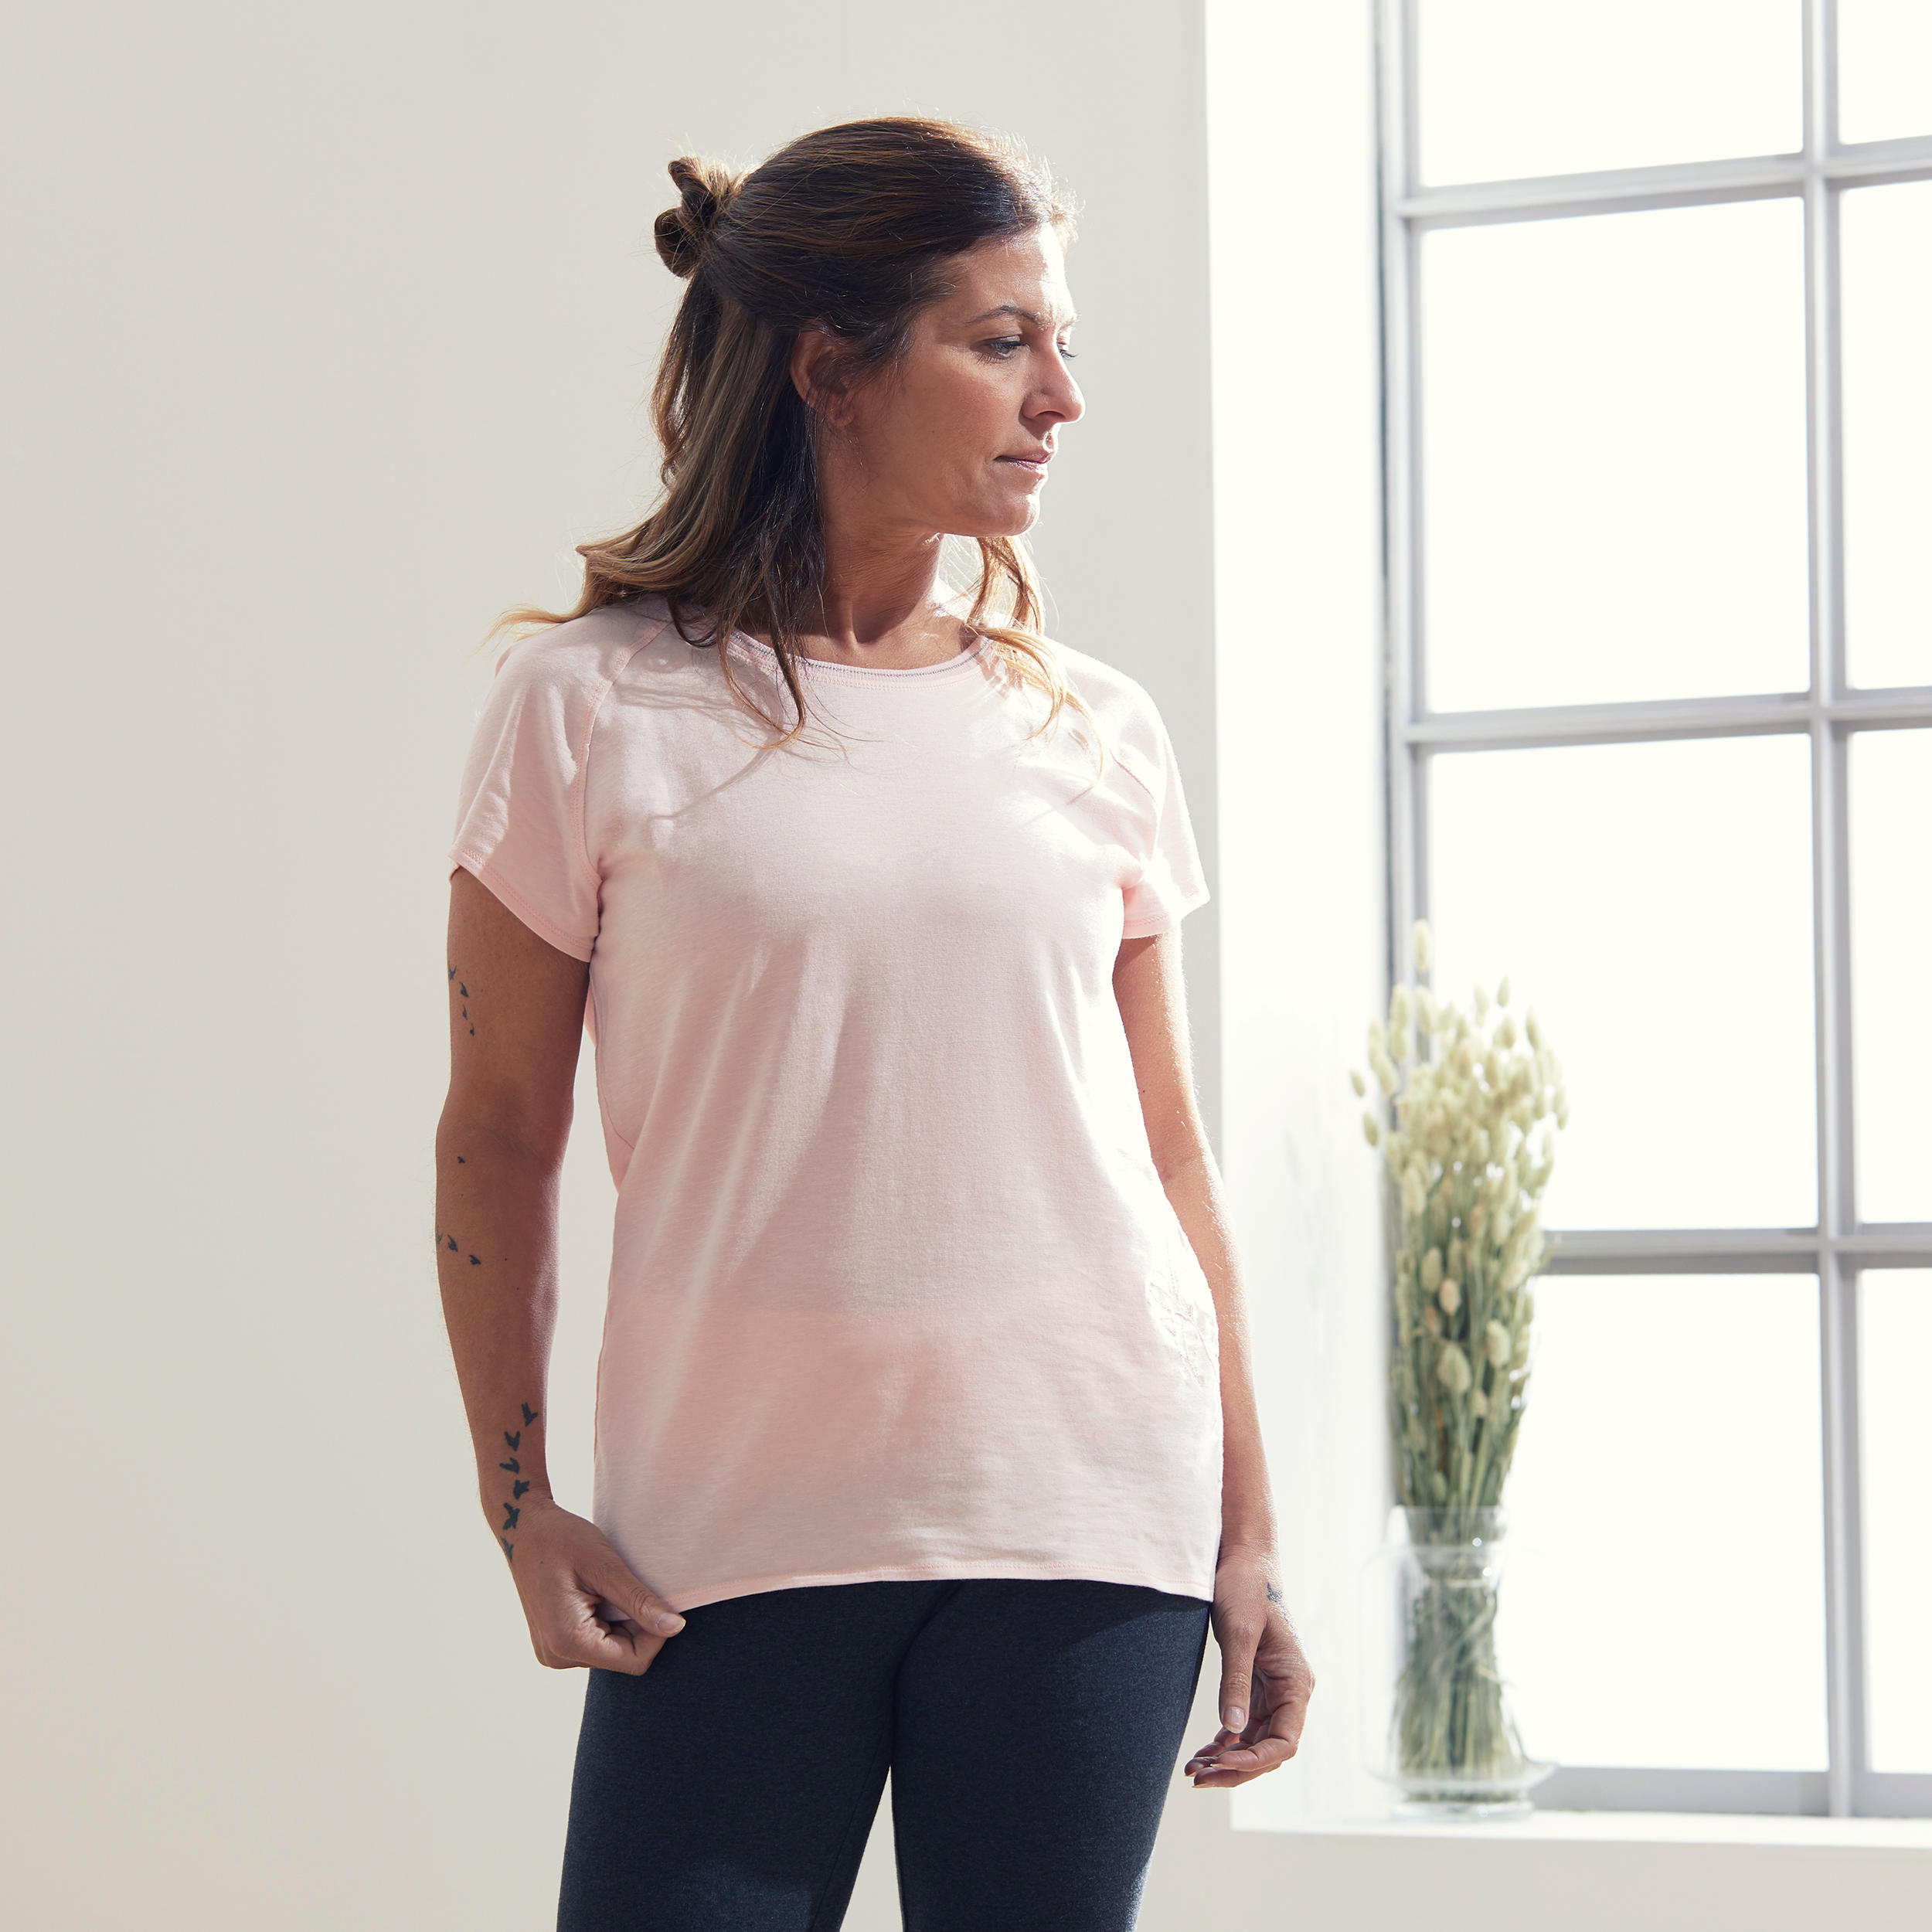 KIMJALY Women's Gentle Yoga T-Shirt - Pink